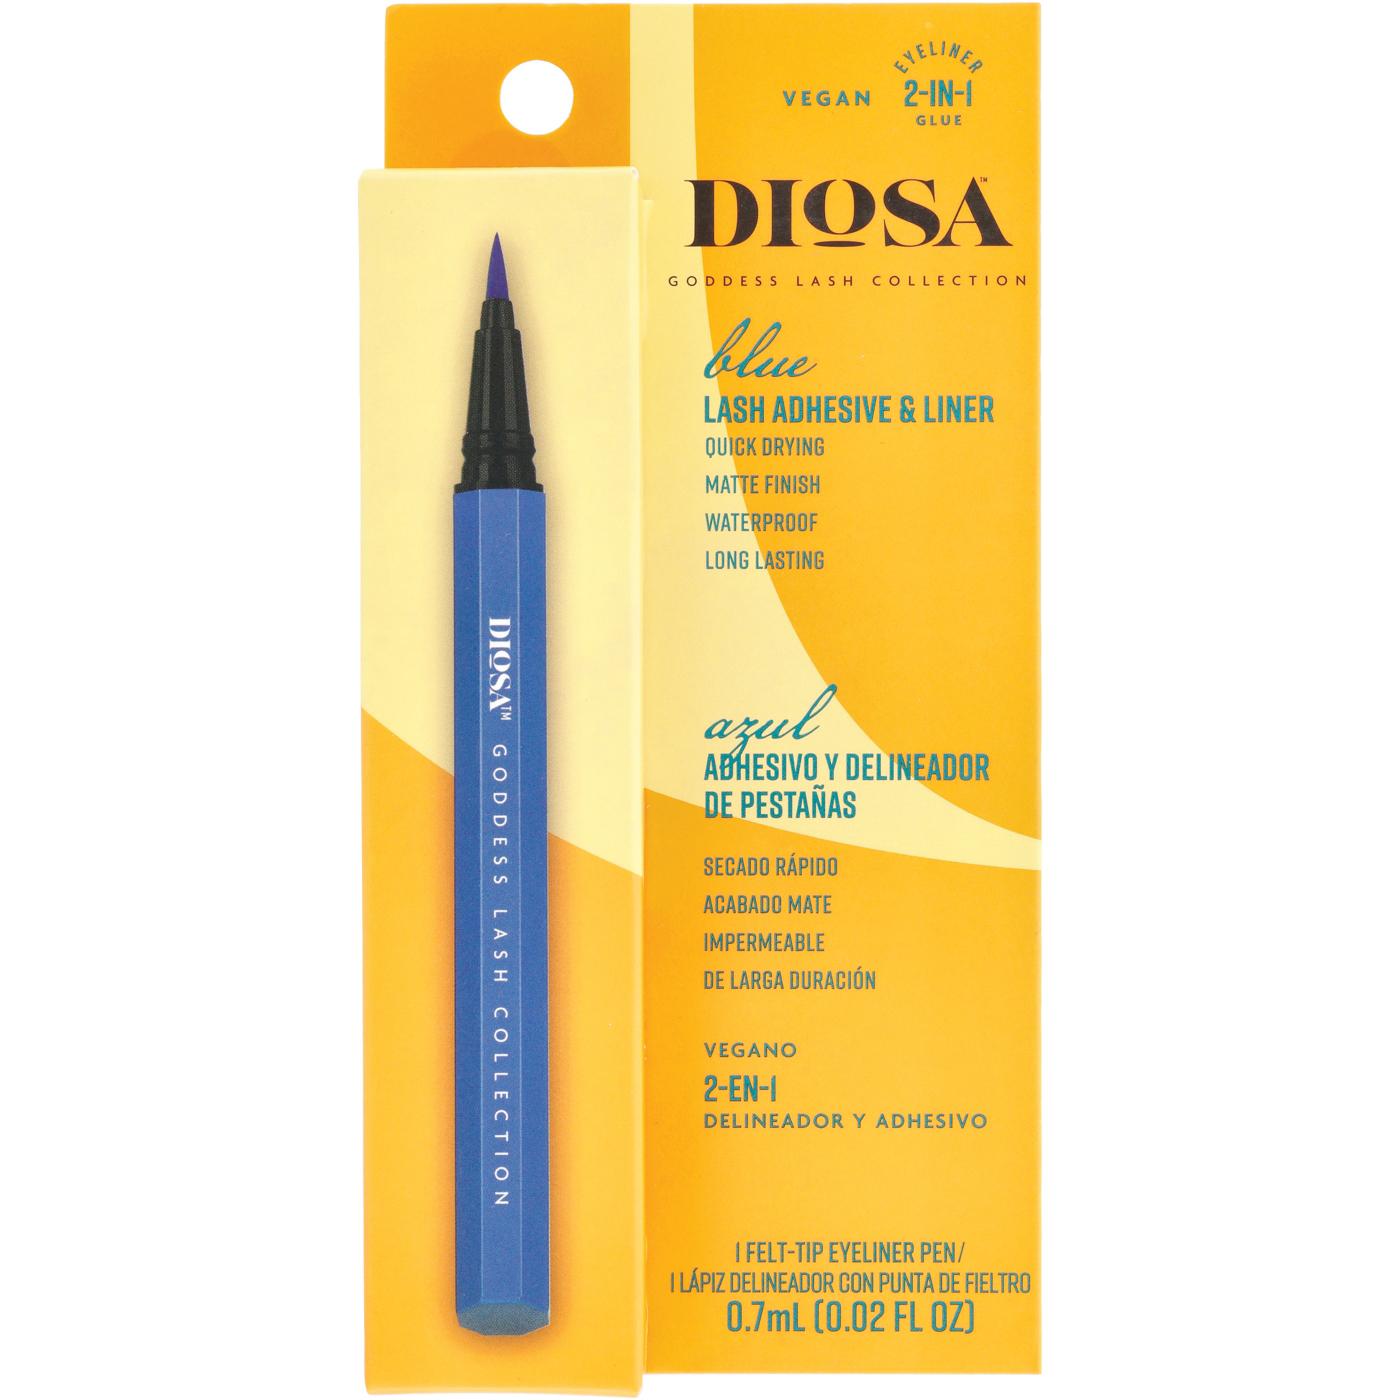 Diosa Lash Adhesive & Liner – Blue; image 1 of 5